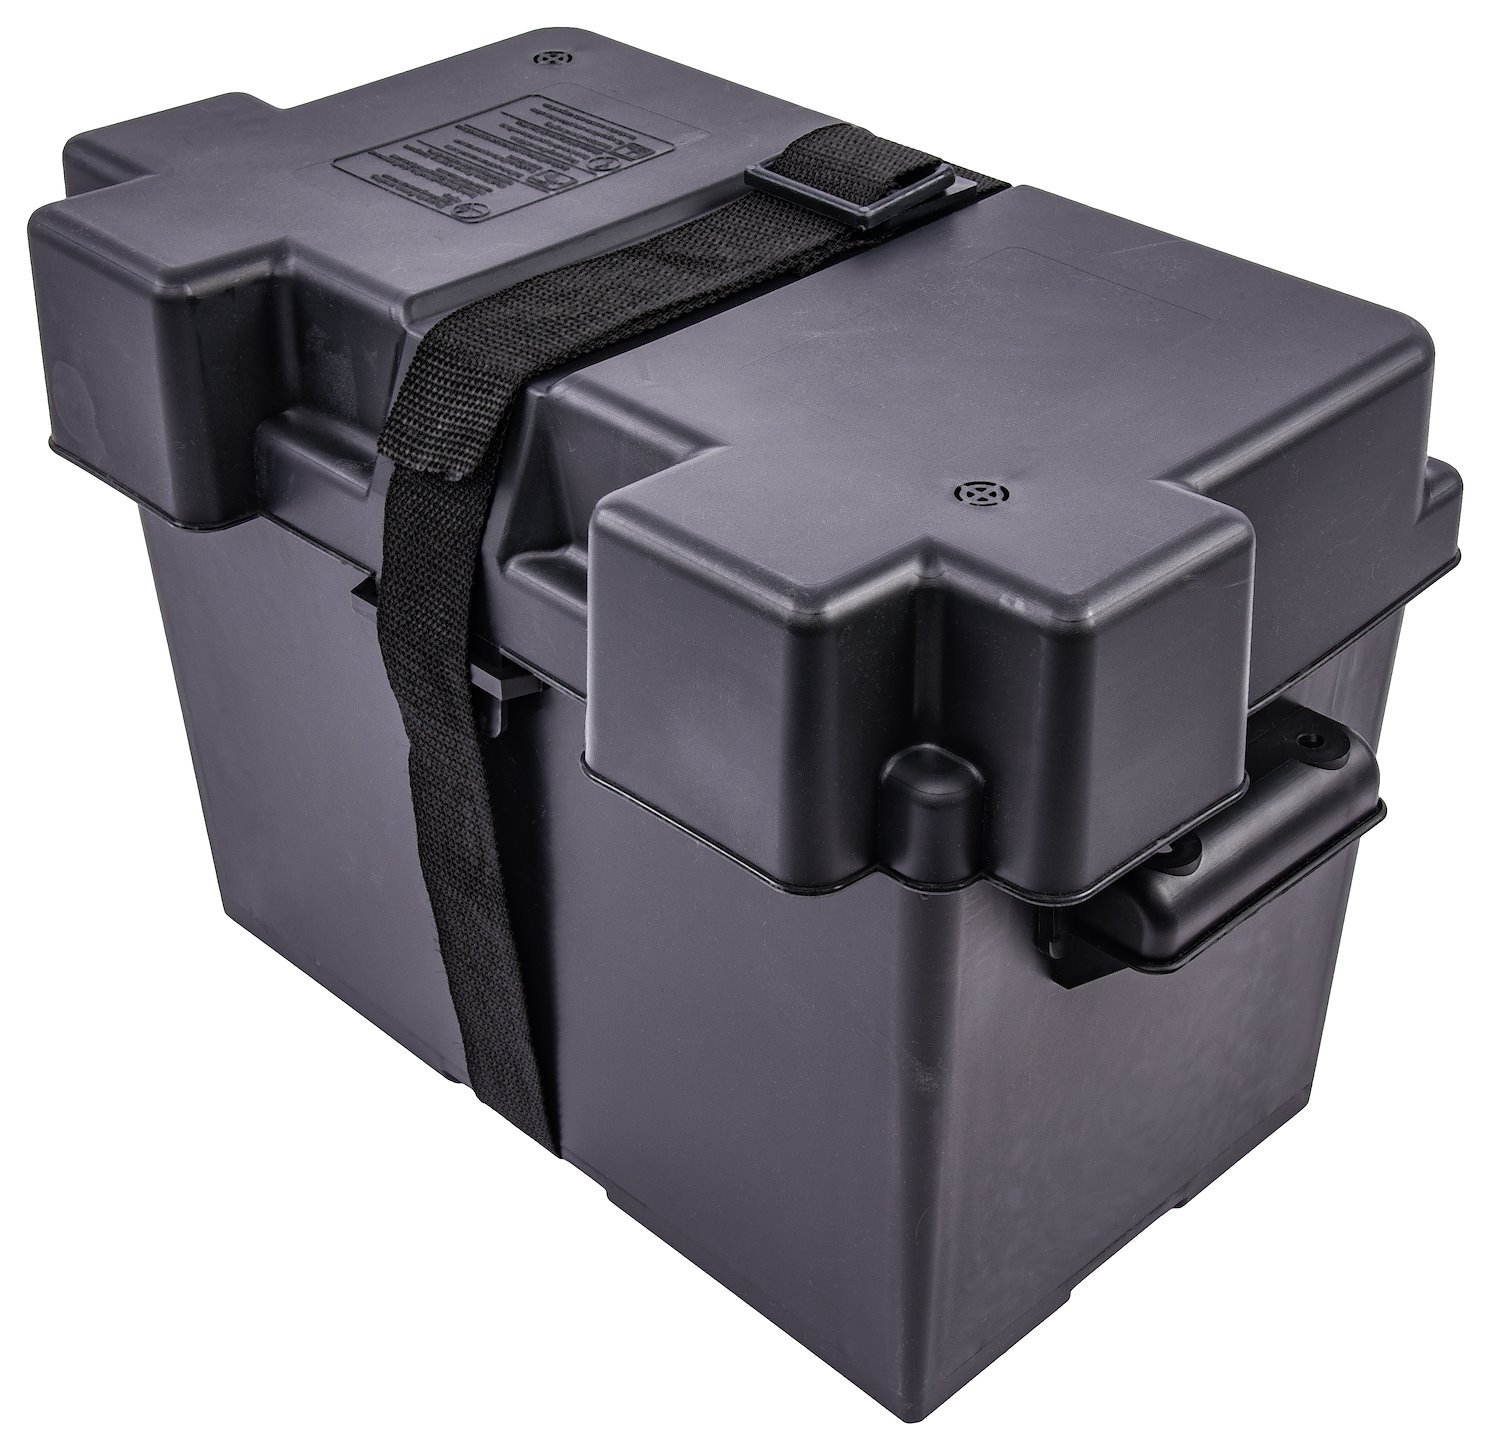 Automotive/Marine Battery Box [ I.D. Dimensions: 12 3/4 in. L x 7 1/4 in. W x 10 in. H]